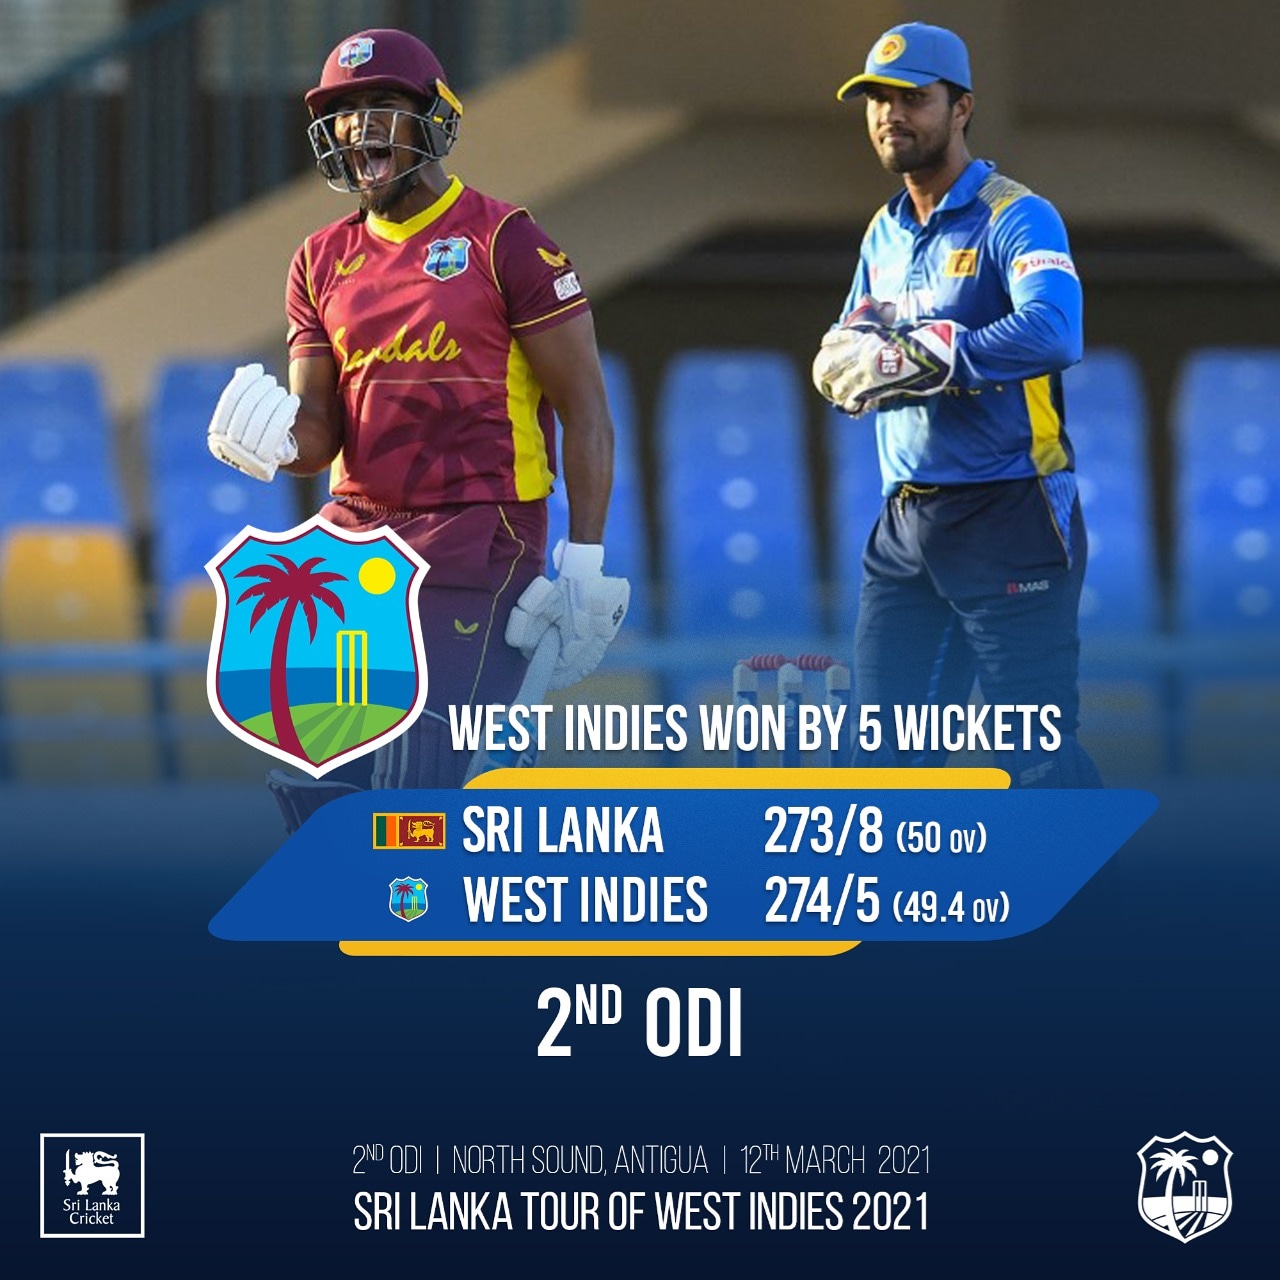 Sri Lanka lose by 5 wickets despite Gunathilaka’s 96 as Lewis fires 101, Hope 84